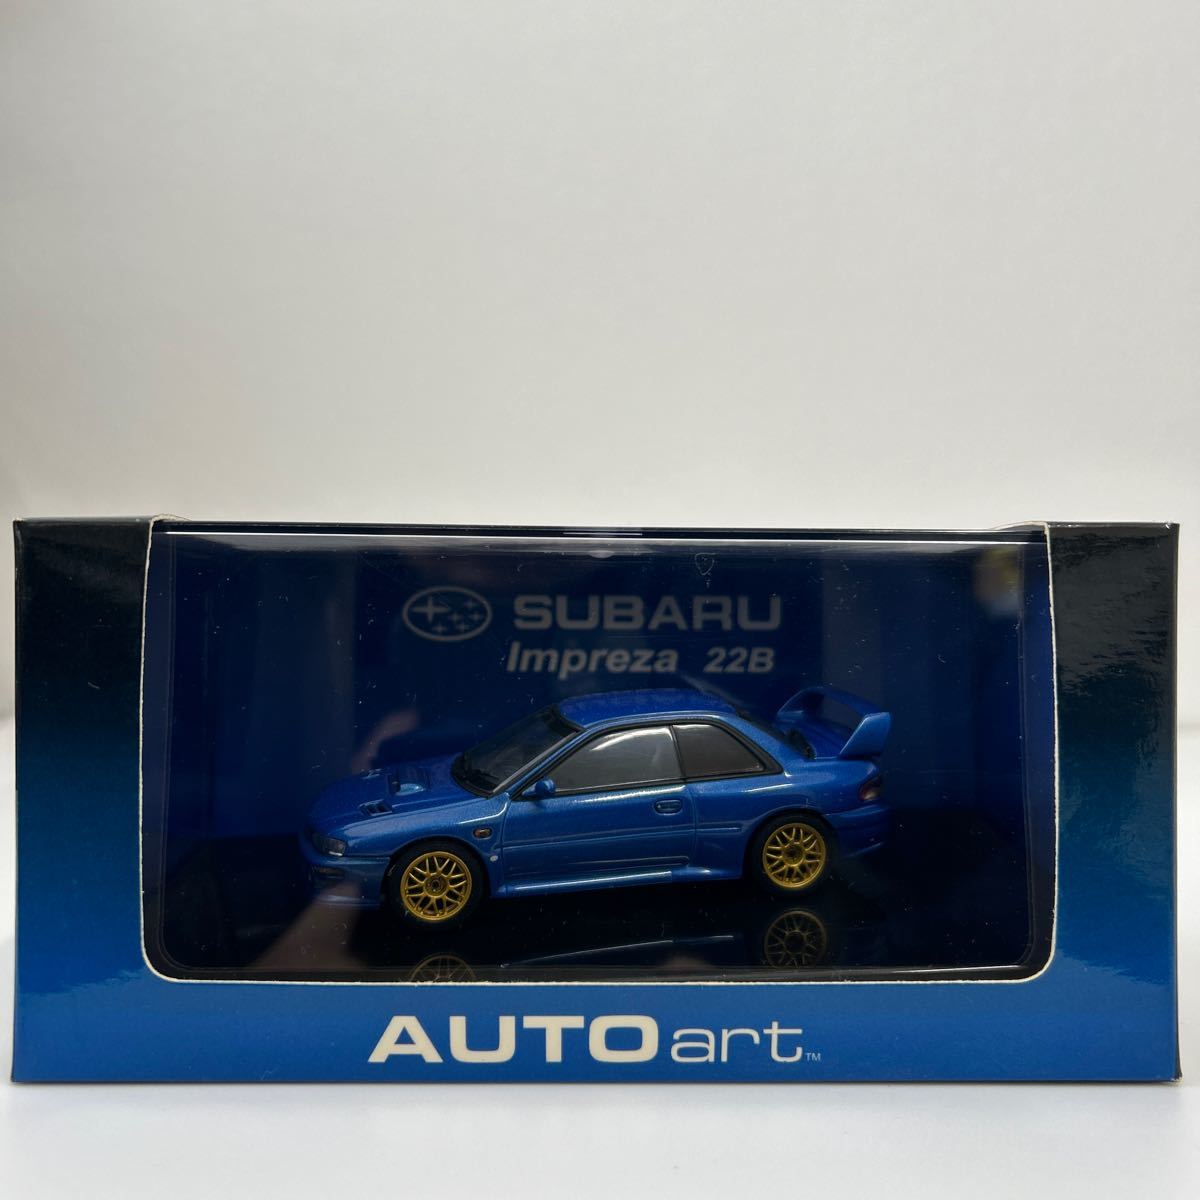 AUTOart 1/43 SUBARU IMPREZA 22B Metallic Blue オートアート スバル インプレッサ ブルー 初代 Aa GC8 STI ミニカー モデルカー